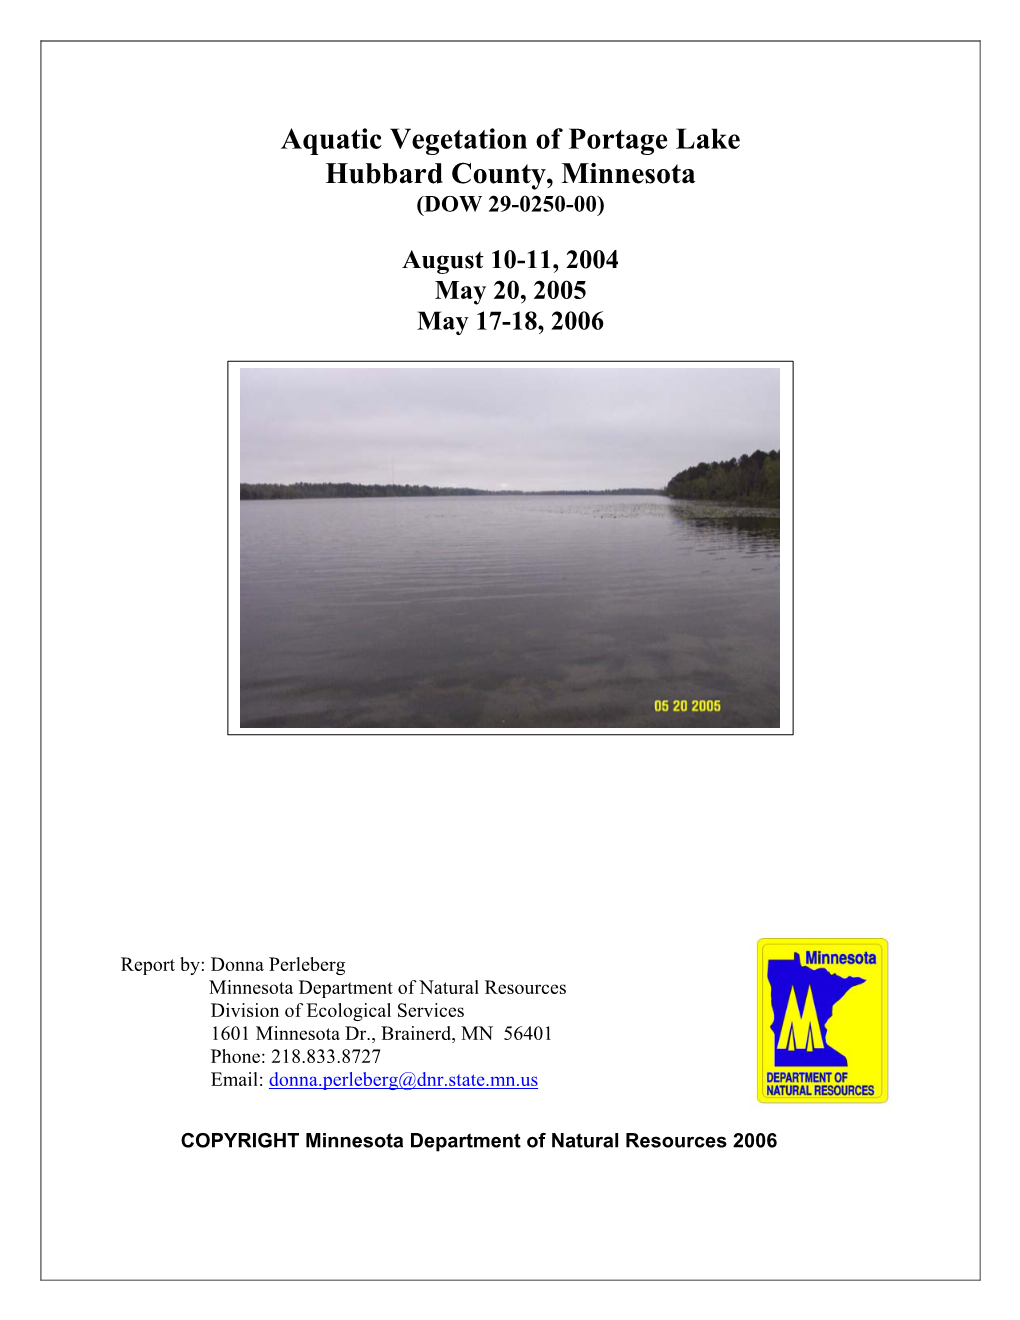 Aquatic Vegetation of Portage Lake Hubbard County, Minnesota (DOW 29-0250-00)